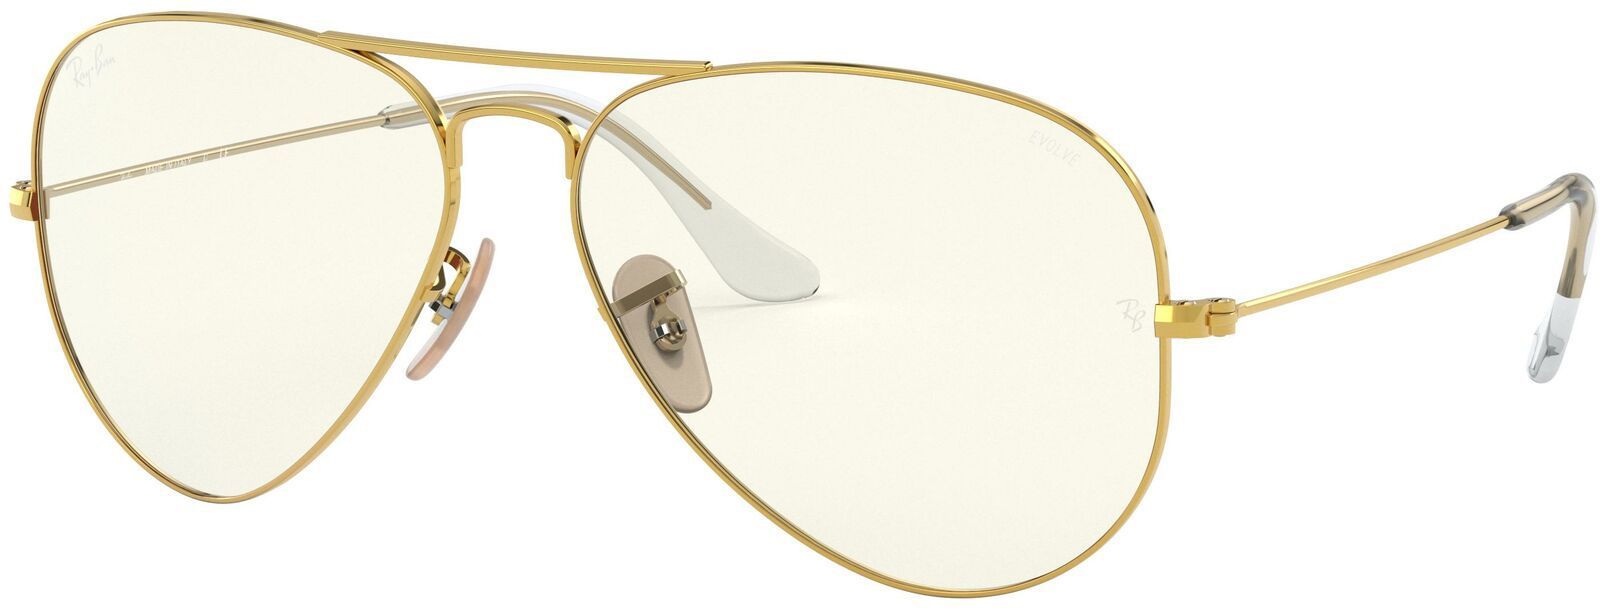 Ray-Ban Aviator Evolve Glasses, Men's, Medium, Gold/Grey | Dick's Sporting Goods